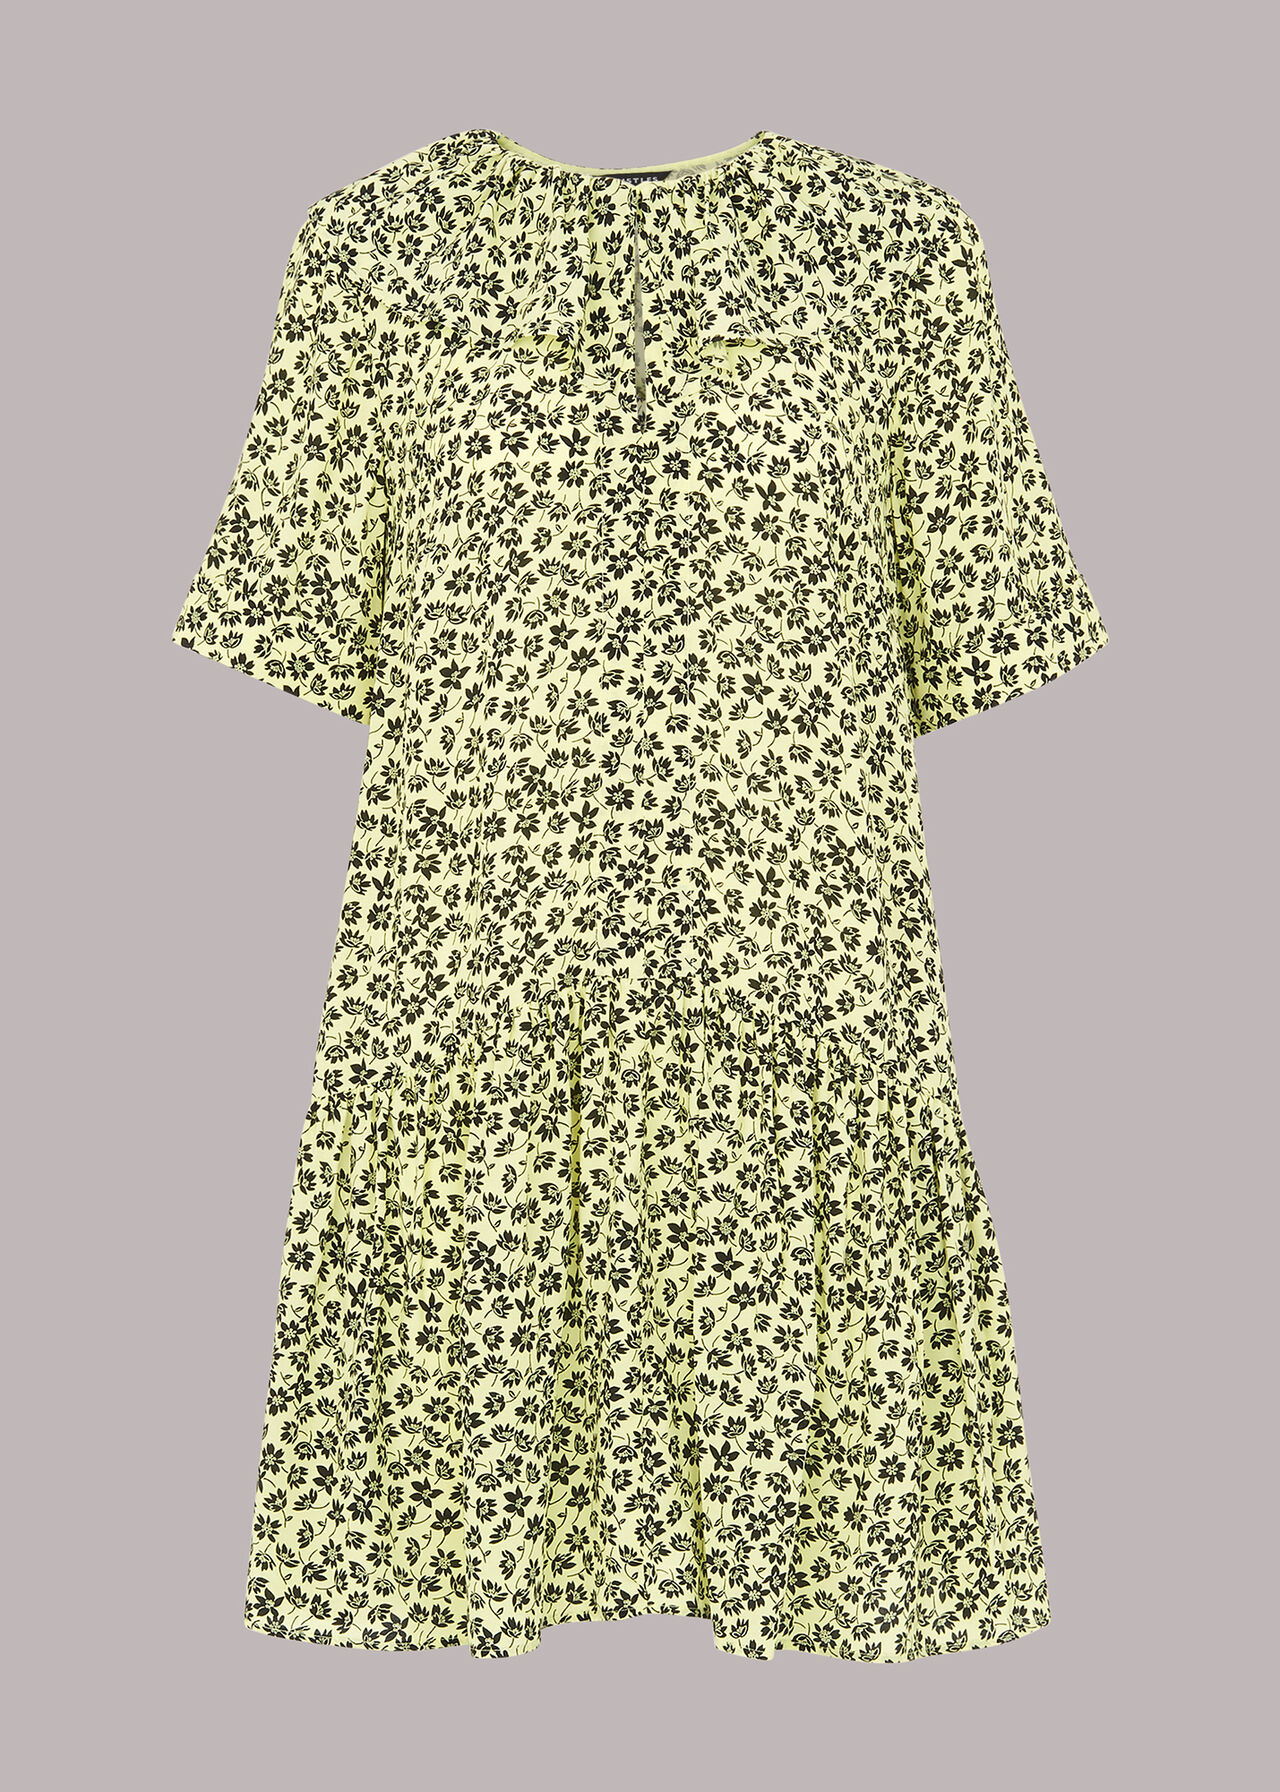 Buttercup Floral Print Dress